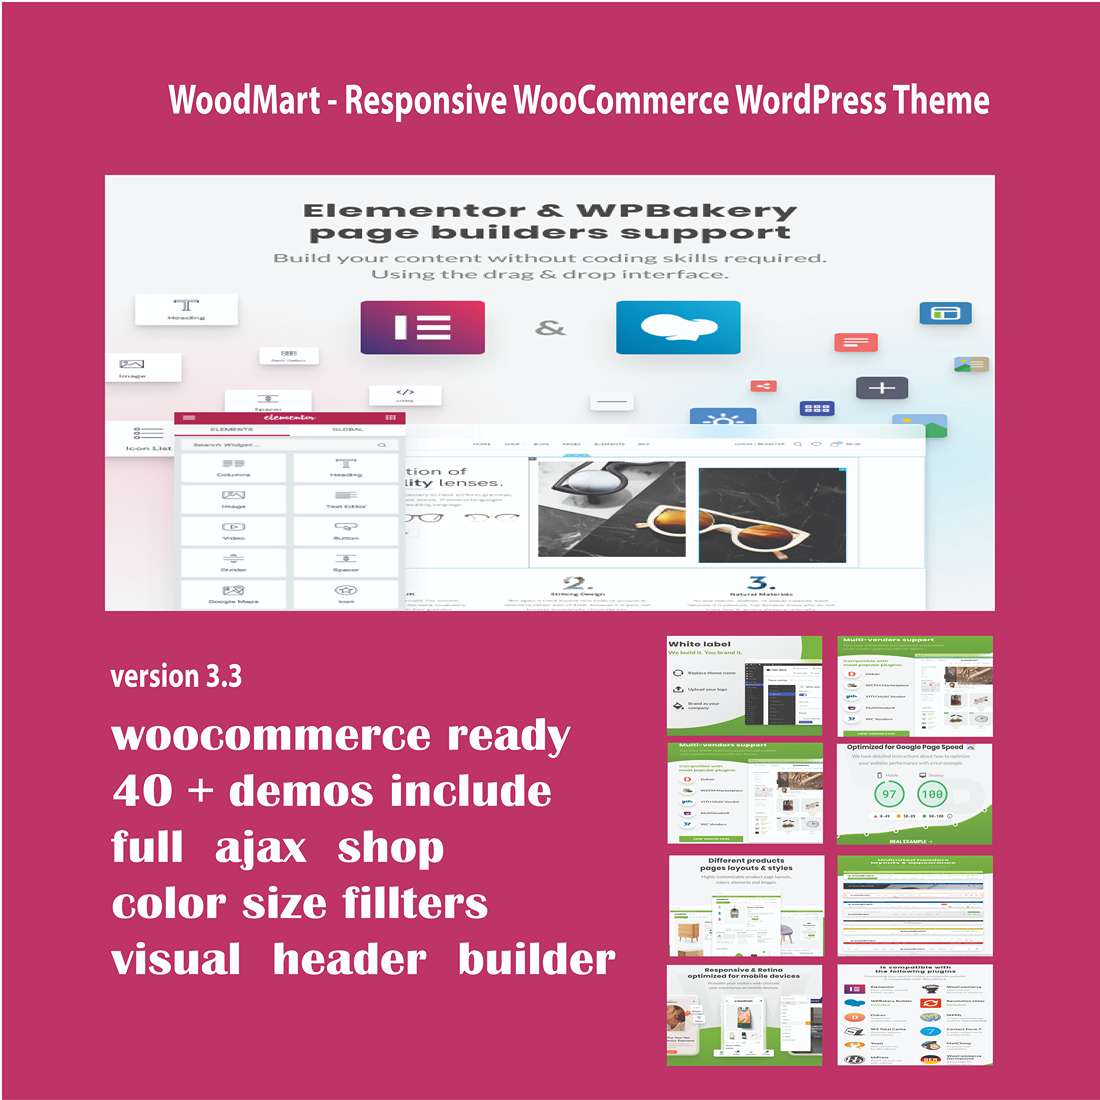 Wood Mart - Responsive Woo Commerce WordPress Theme cover image.